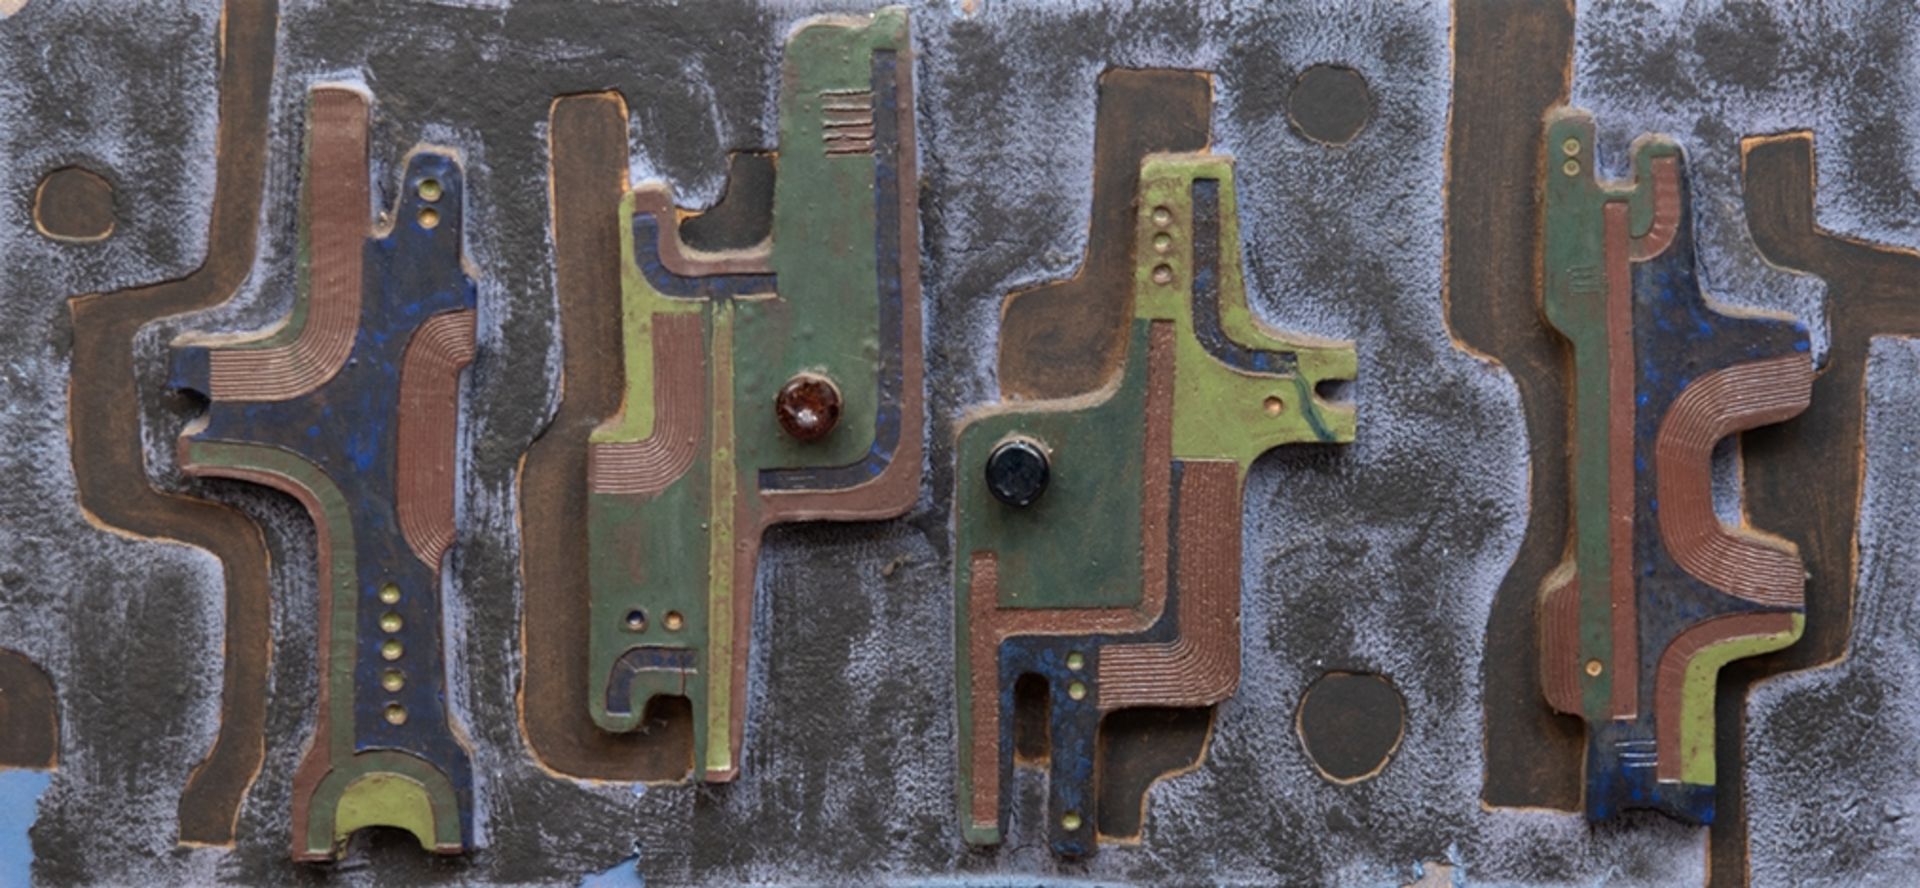 "Relief-Baukeramik", auf Sperrholzplatte, rückseitig monogr. "HMK", 2/67, 40x84,5 cm, Rahmen